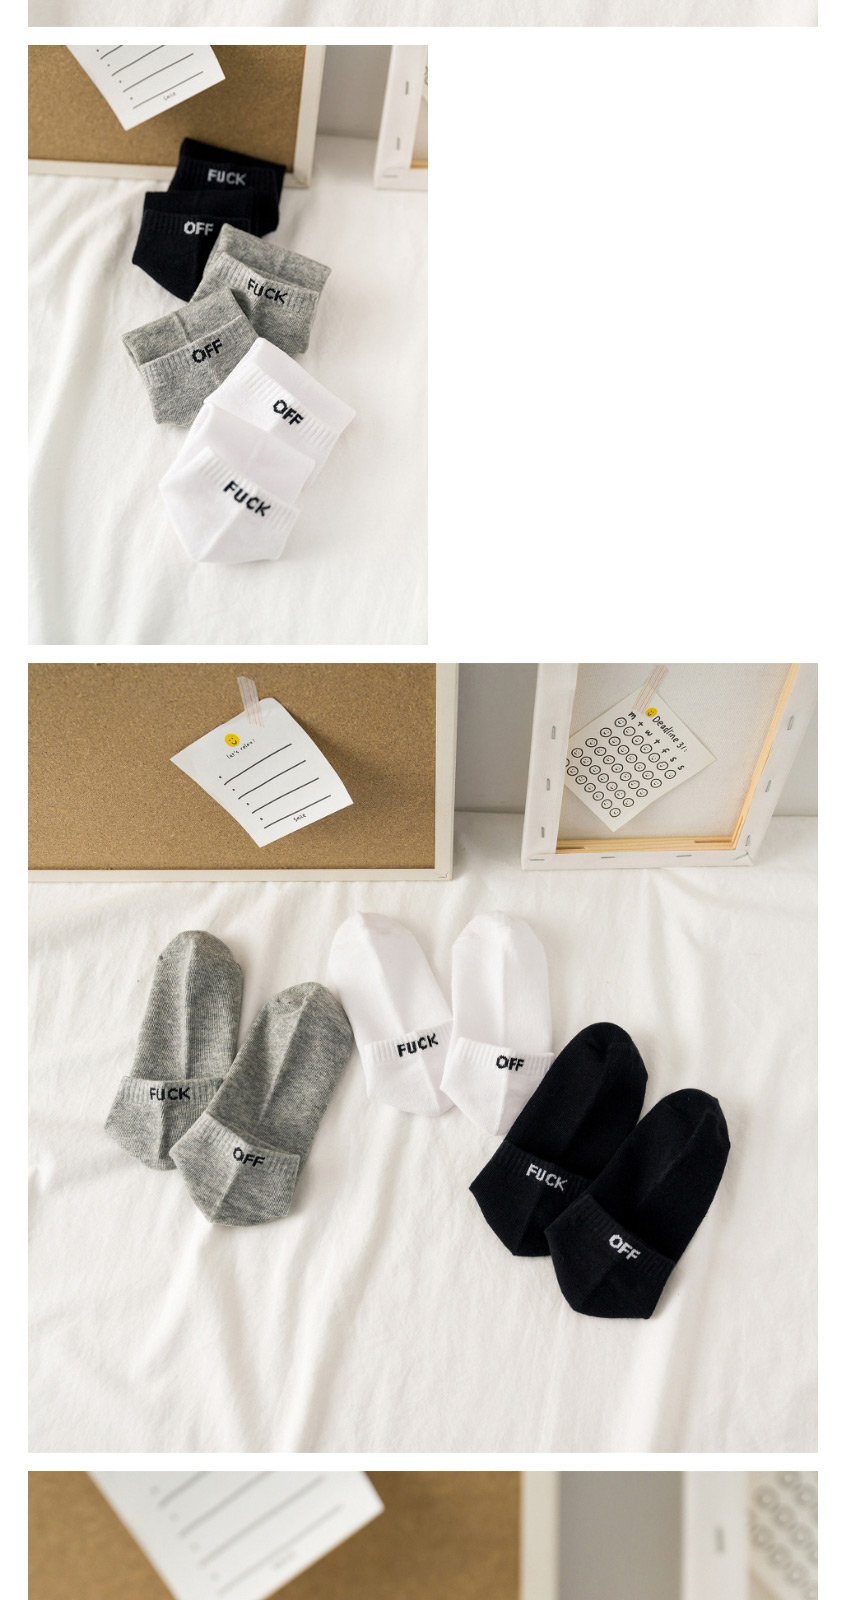 Fashion Black Letter Cotton Non-slip Boat Socks,Fashion Socks